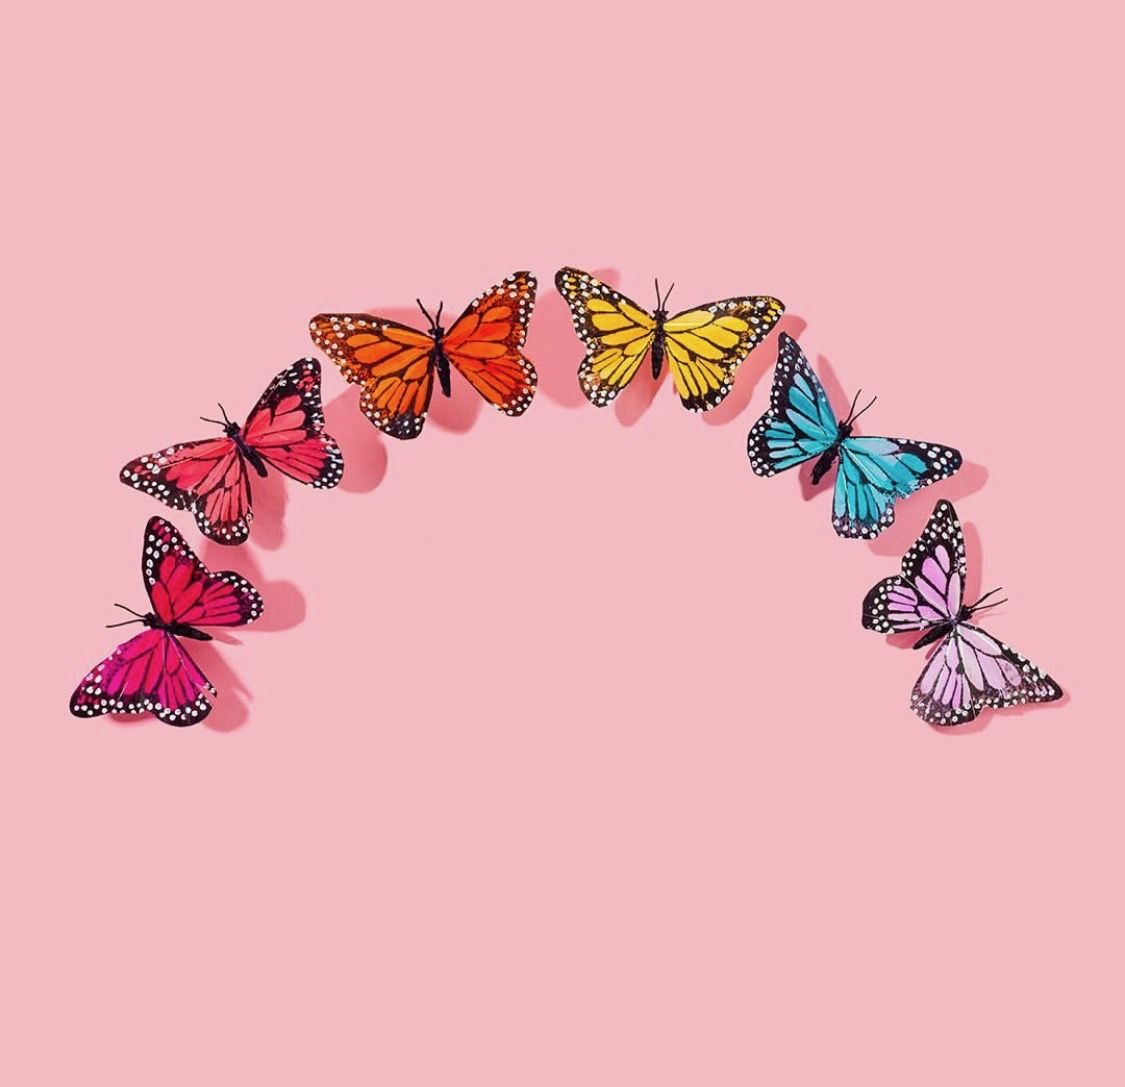 Tumblr Butterfly Wallpaper Aesthetic